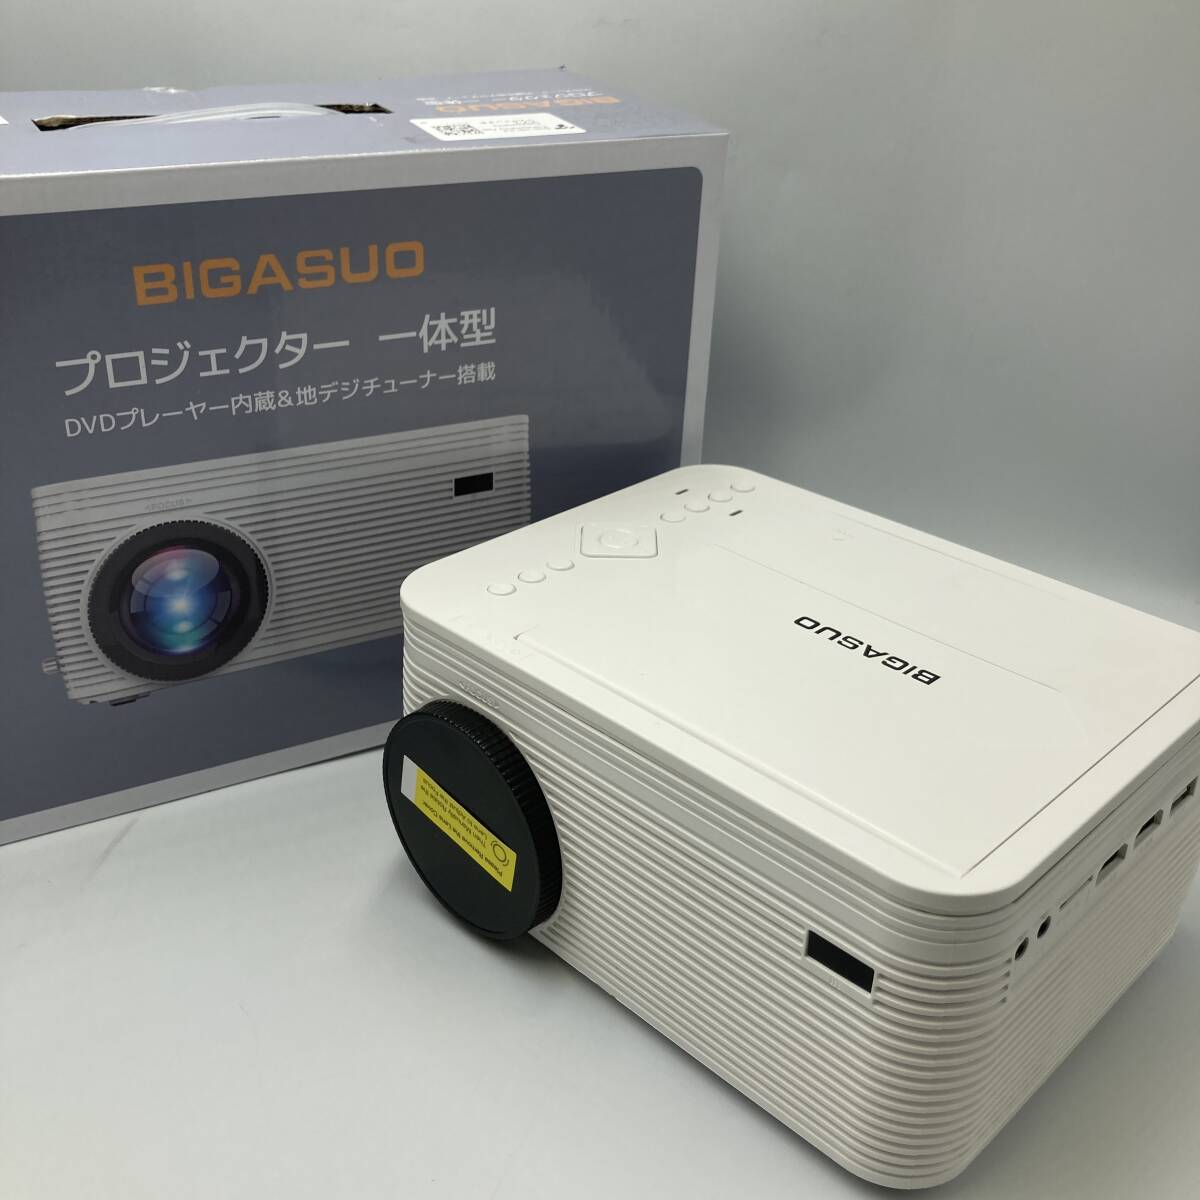 [miniB-CAS card attaching ]BIGASUO B-302TX projector DVD player digital broadcasting TV tuner installing one body home theater /Y21268-S1